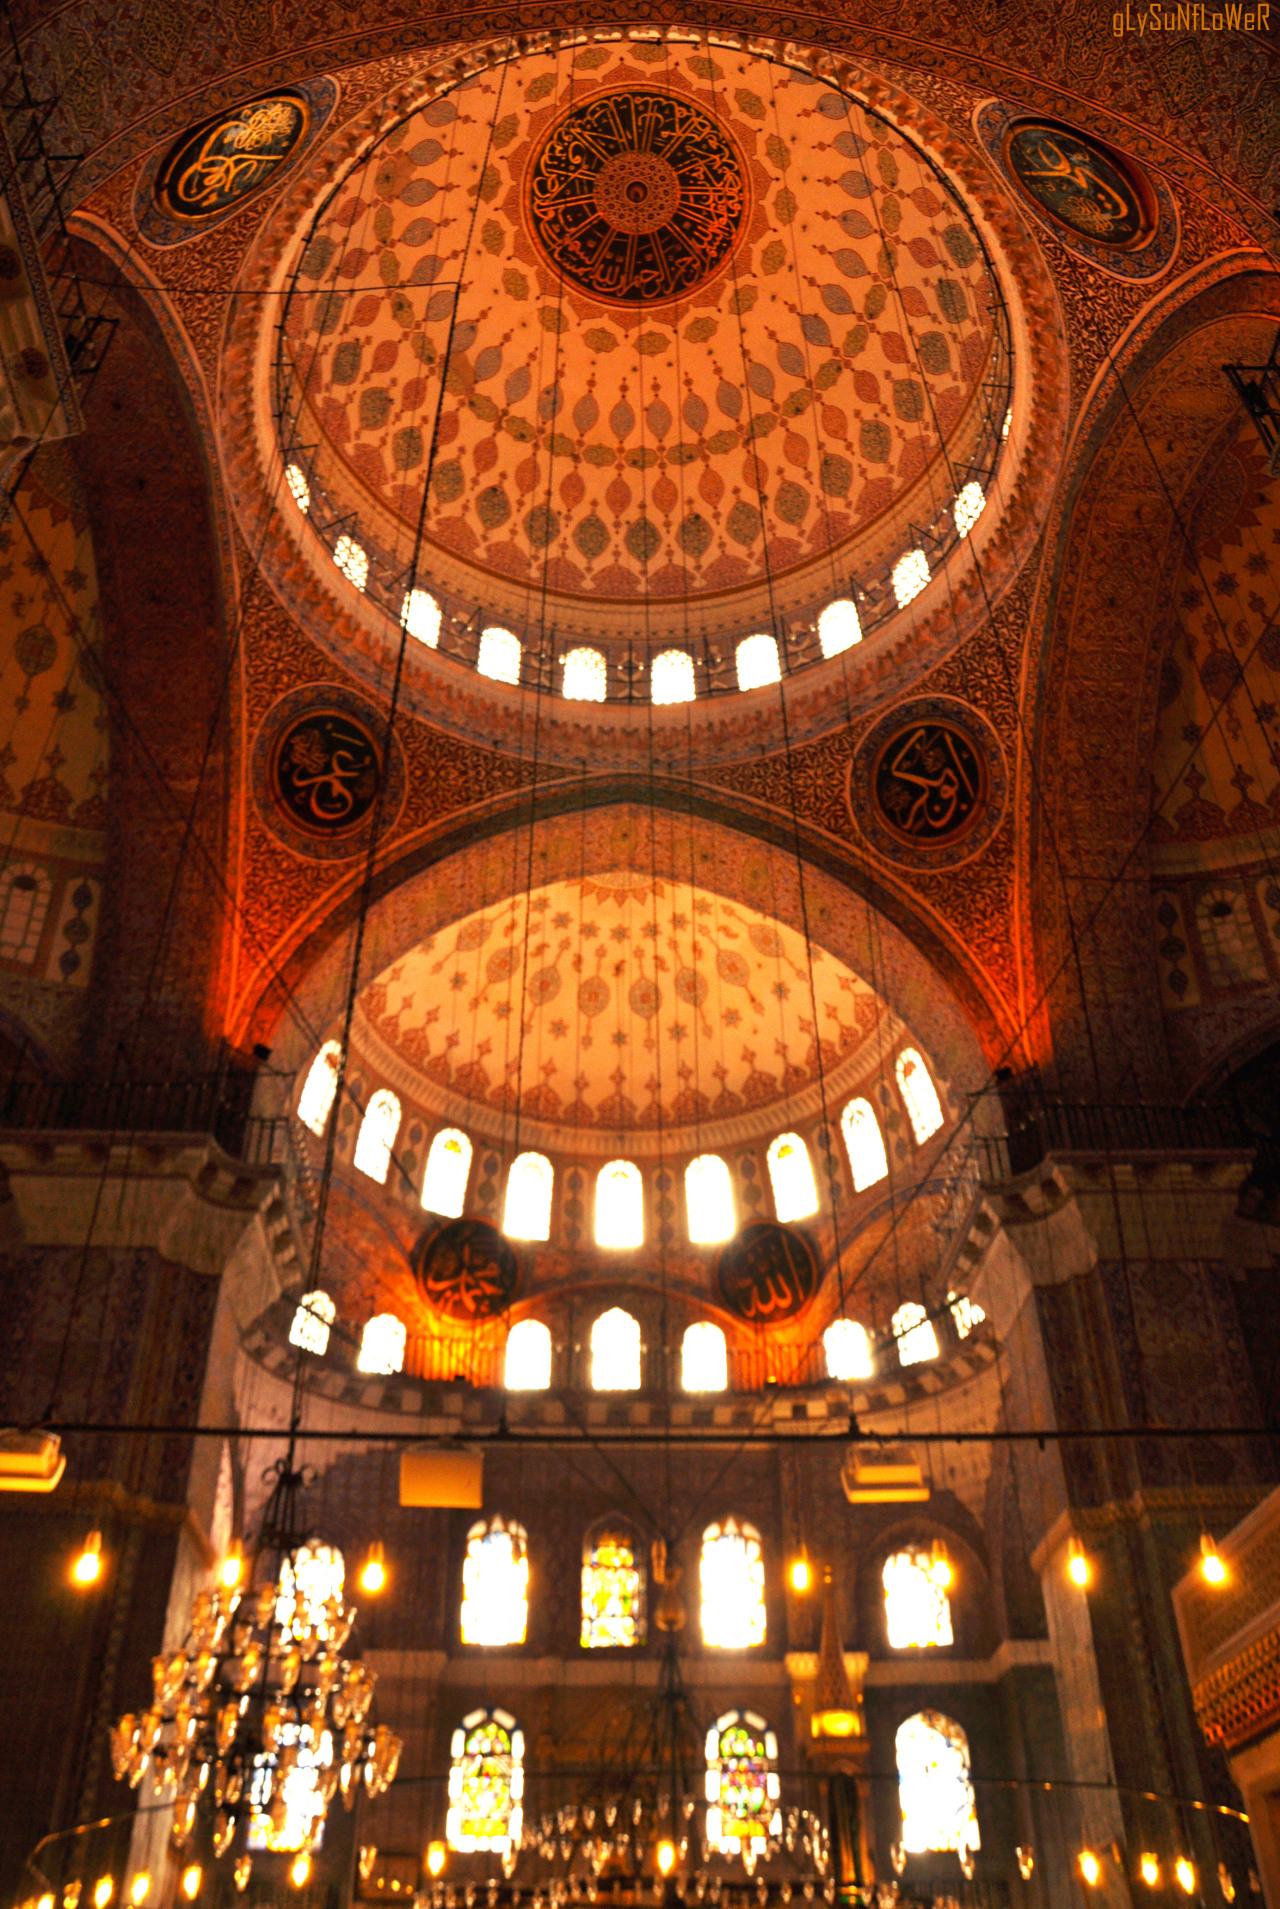 ﷲ Eмinöηü Yeηi Cαмi ﷲ
(Eminönü Yeni Cami) The New Mosque (1597) is an Ottoman imperial mosque located in the Eminönü district of Istanbul, Turkey. It is situated on the Golden Horn at the southern end of the Galata Bridge. It is one of the best-known...